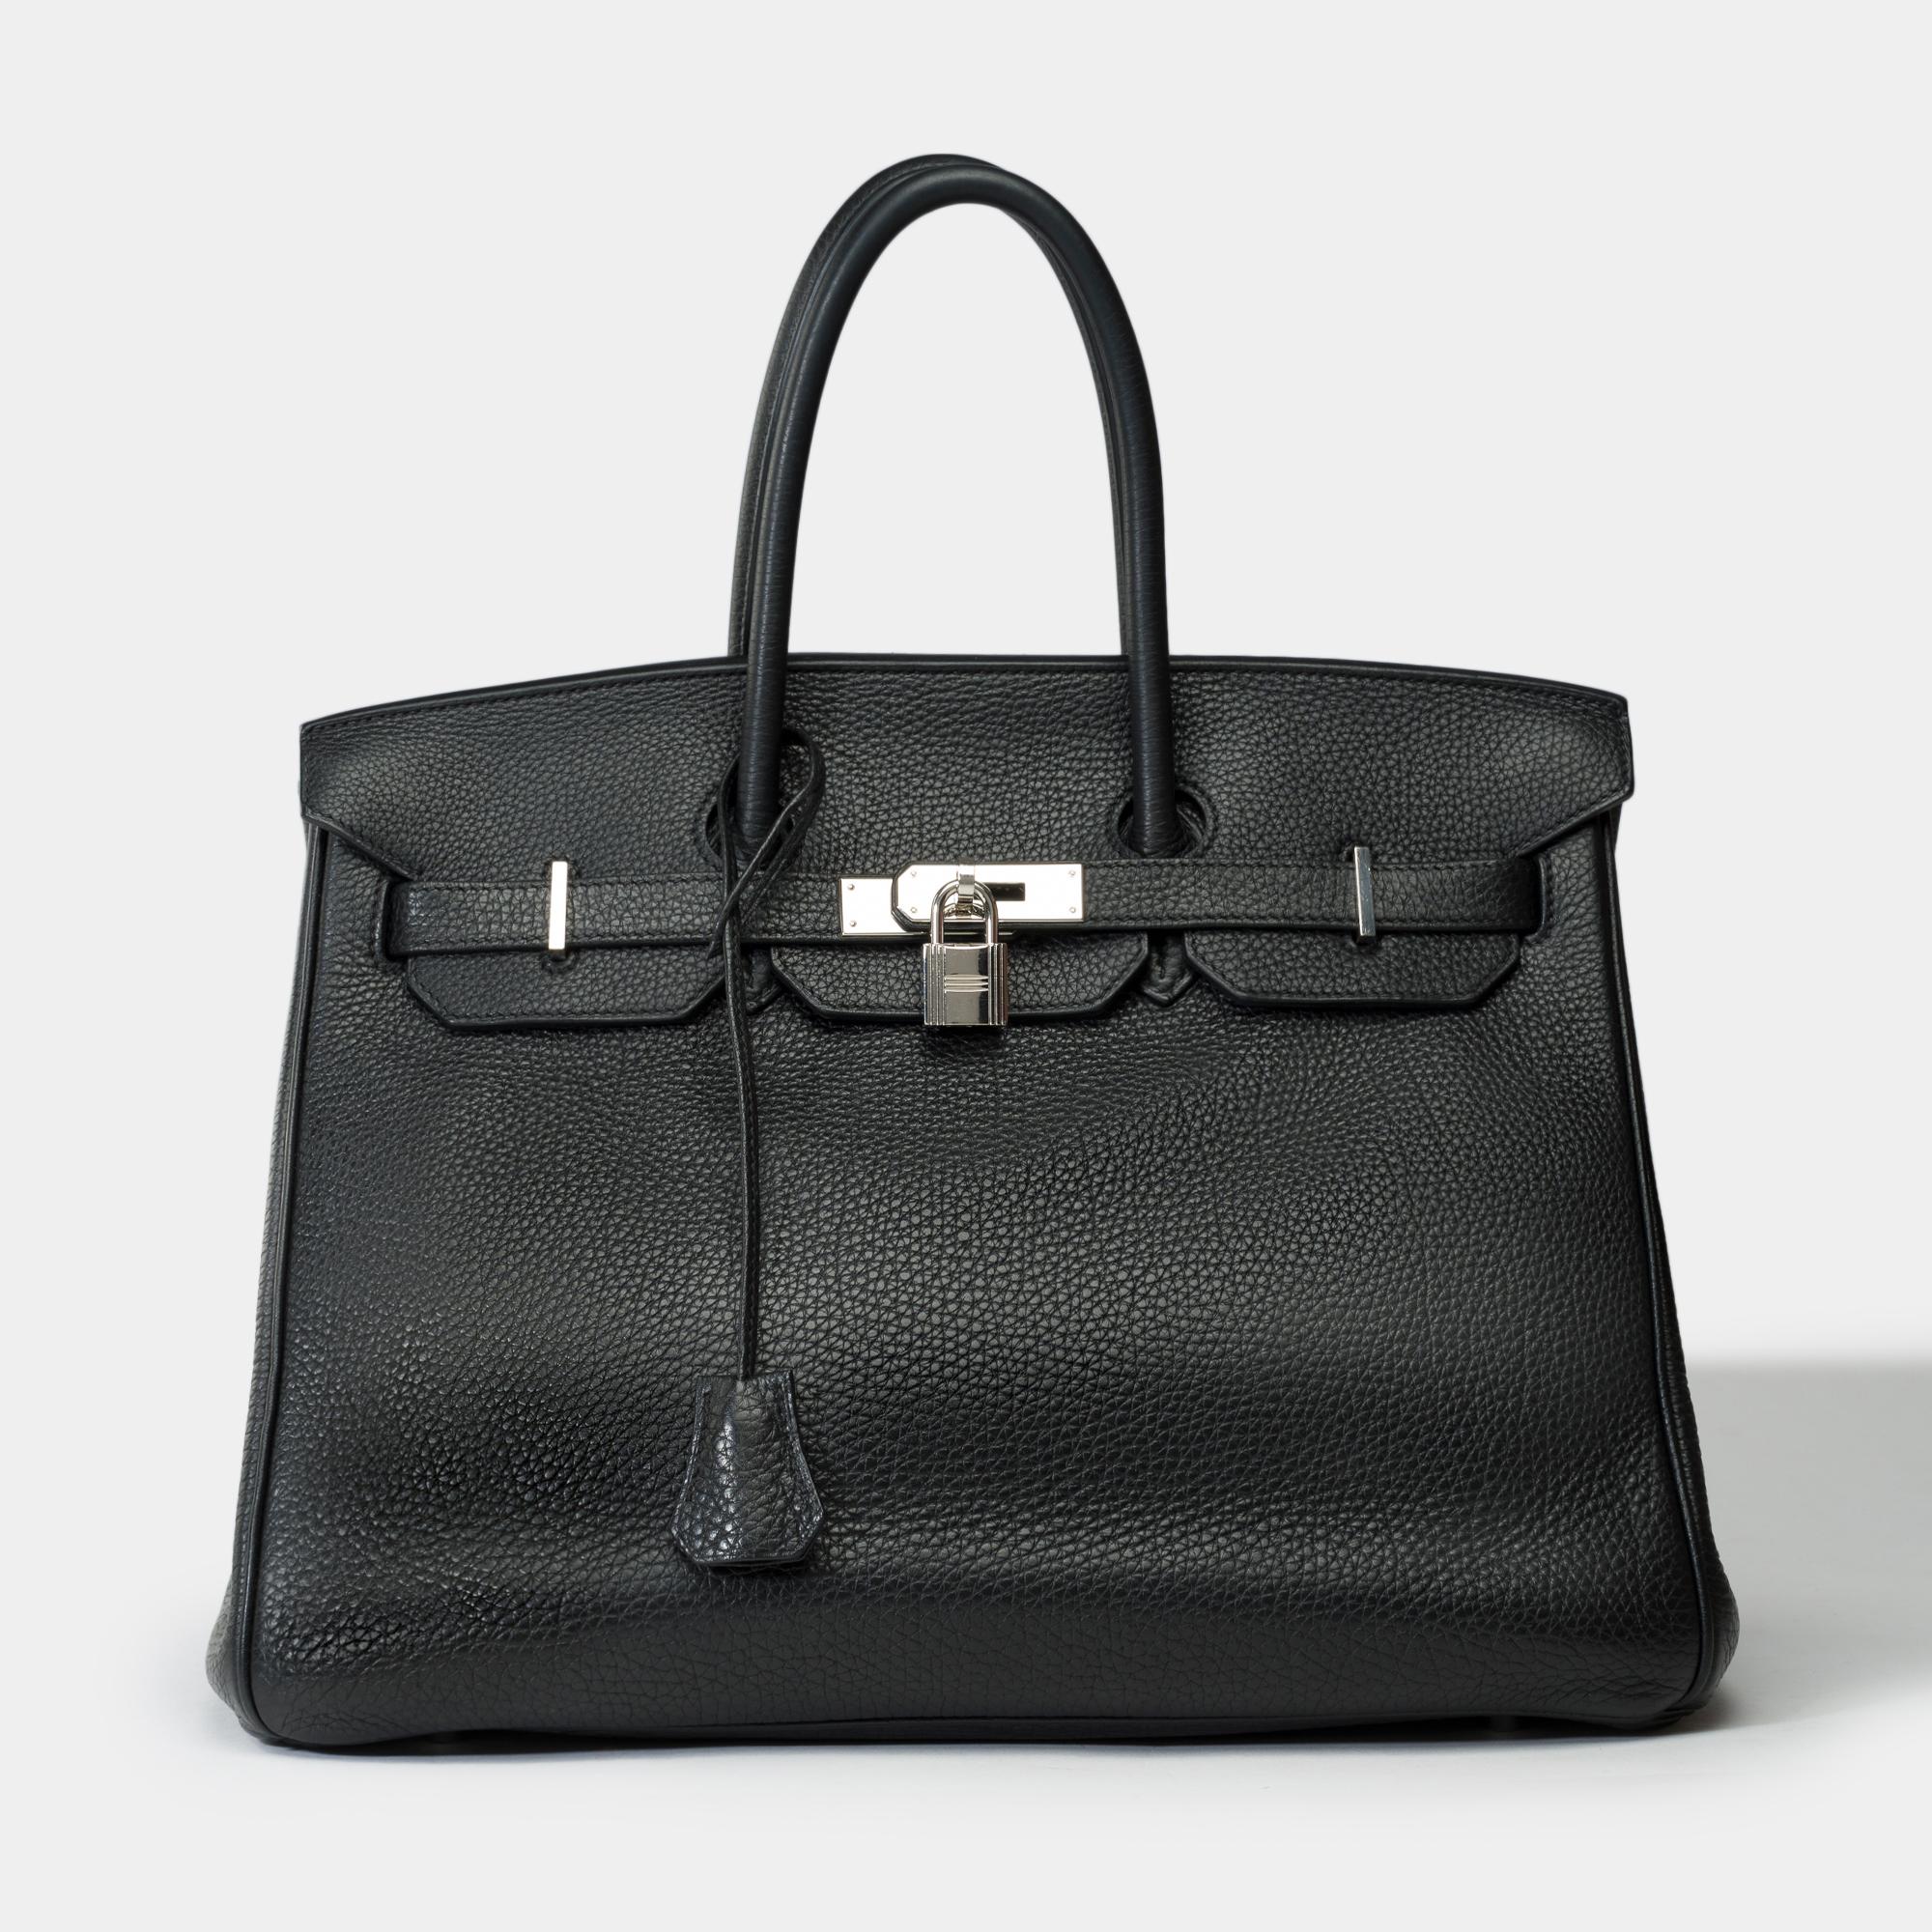 Stunning​ ​​Hermes​​ ​​Birkin​​ ​​35​​ ​​handbag​​ ​​in​​ ​​black​​ ​​Togo​​ ​​leather​​ ​​,​​ ​​palladium​​ ​​silver​​ ​​metal​​ ​​trim​​ ​​,​​ ​​double​​ ​​handle​​ ​​black​​ ​​leather​​ ​​allowing​​ ​​a​​ ​​hand​ ​carry

Flap​​ ​​closure
Black​​